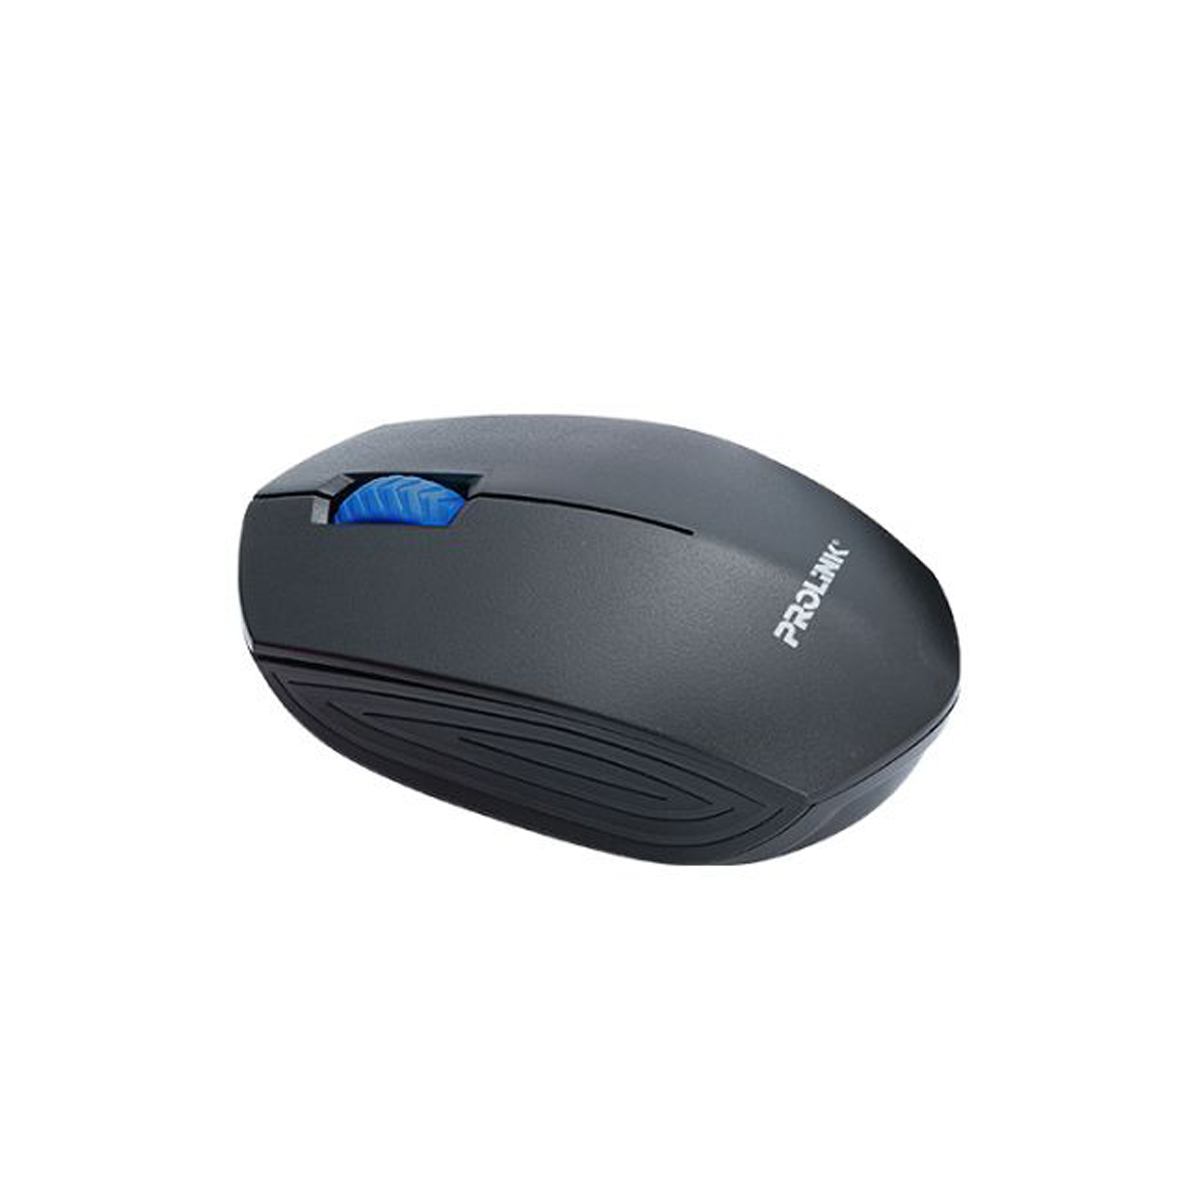 Chuột máy tính - Mouse Prolink PMW5006